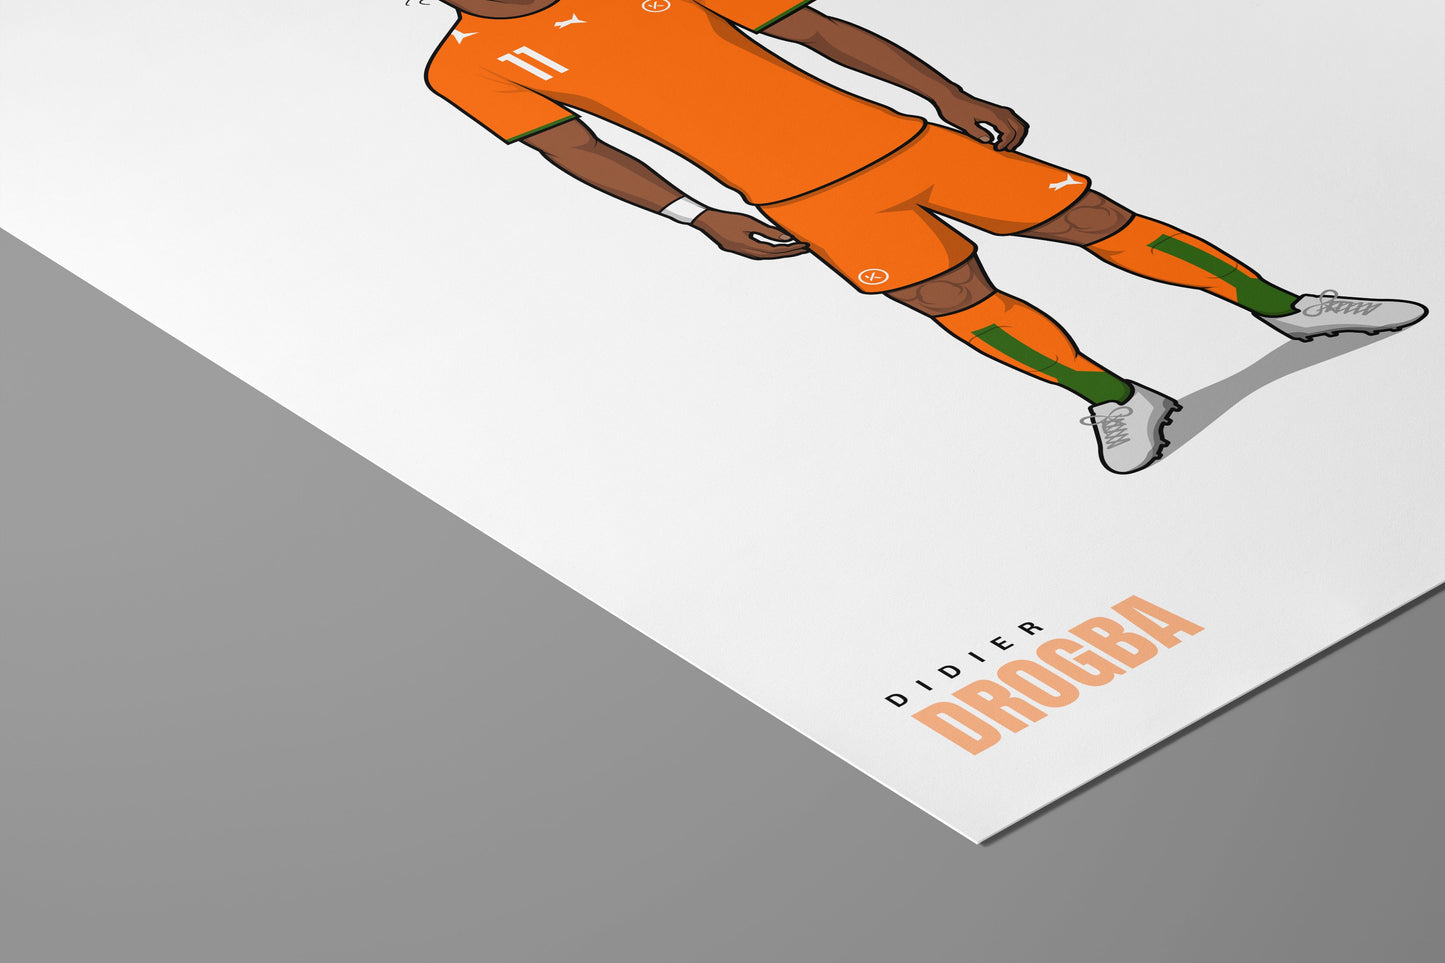 Didier Drogba - Football Great